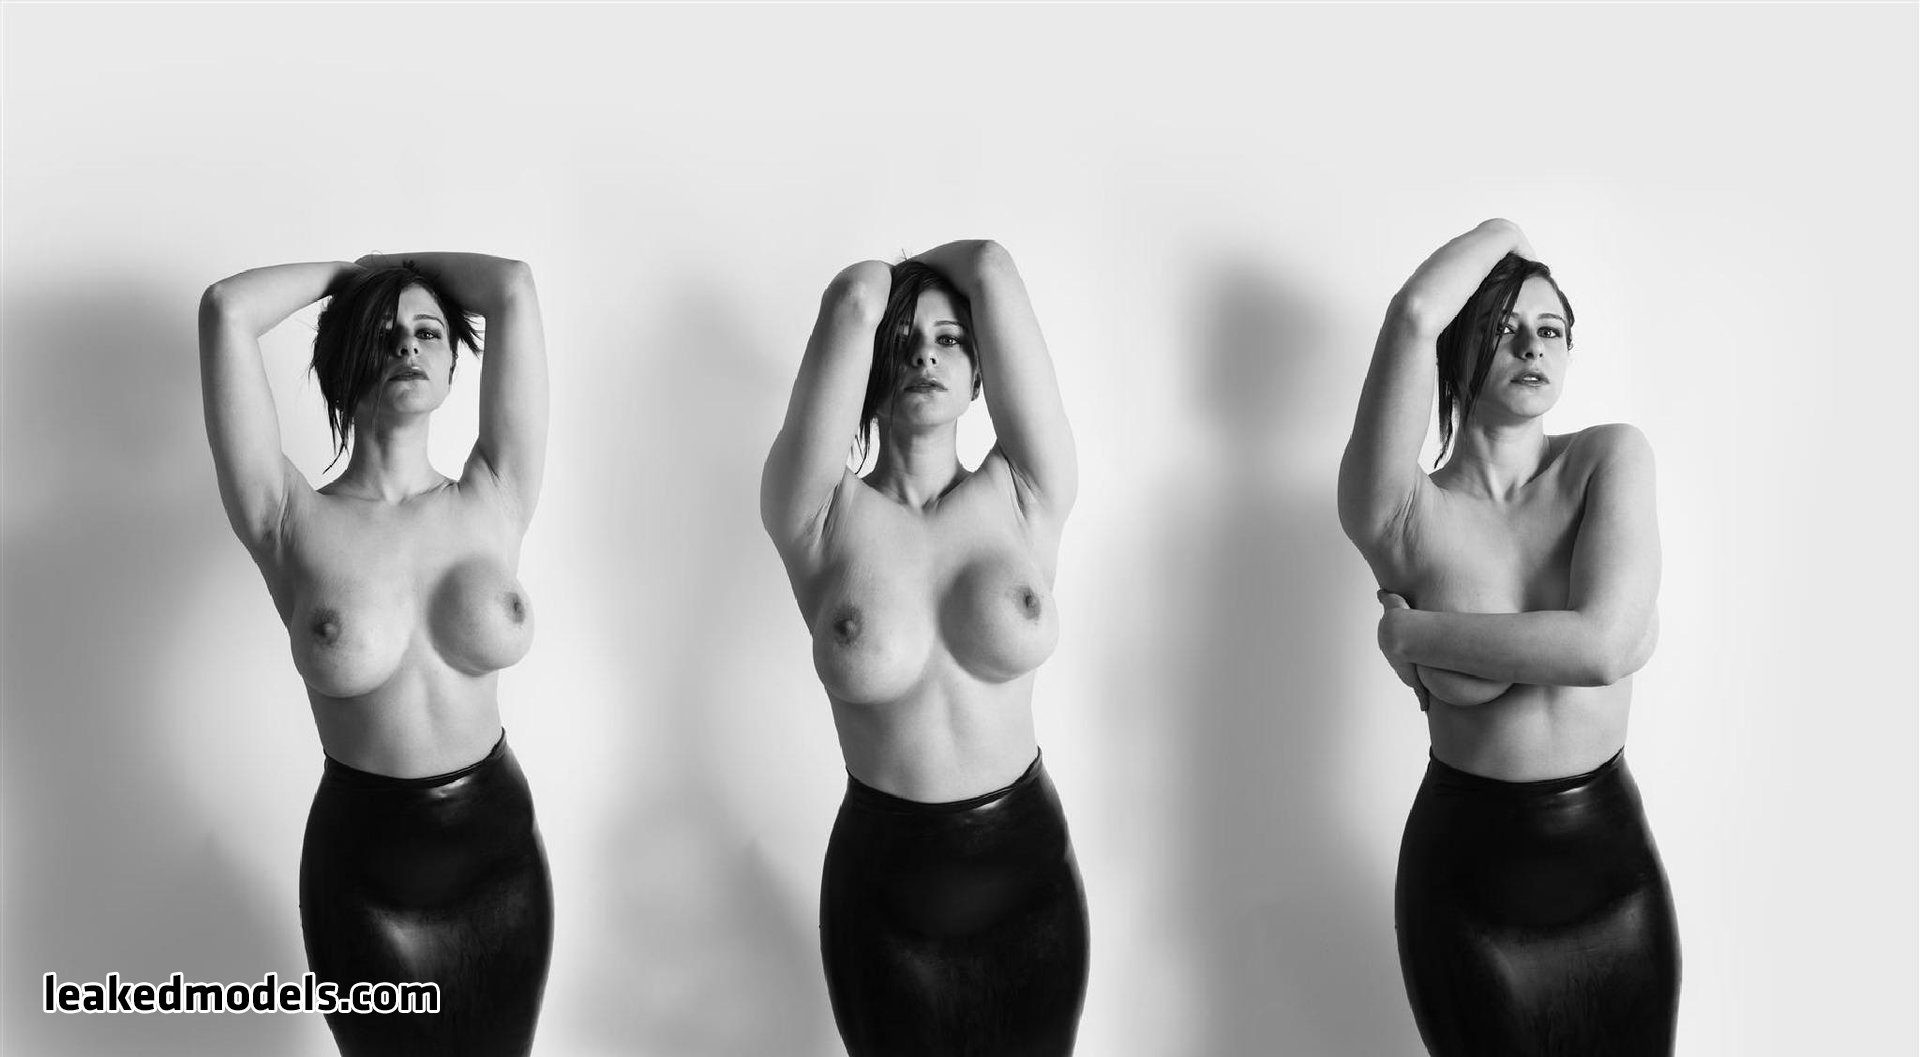 kristina rdovnovich leaked nude leakedmodels.com 0040 - Kristina Rdovnovich Other Leaked Models Nude Leaks (40 Photos)